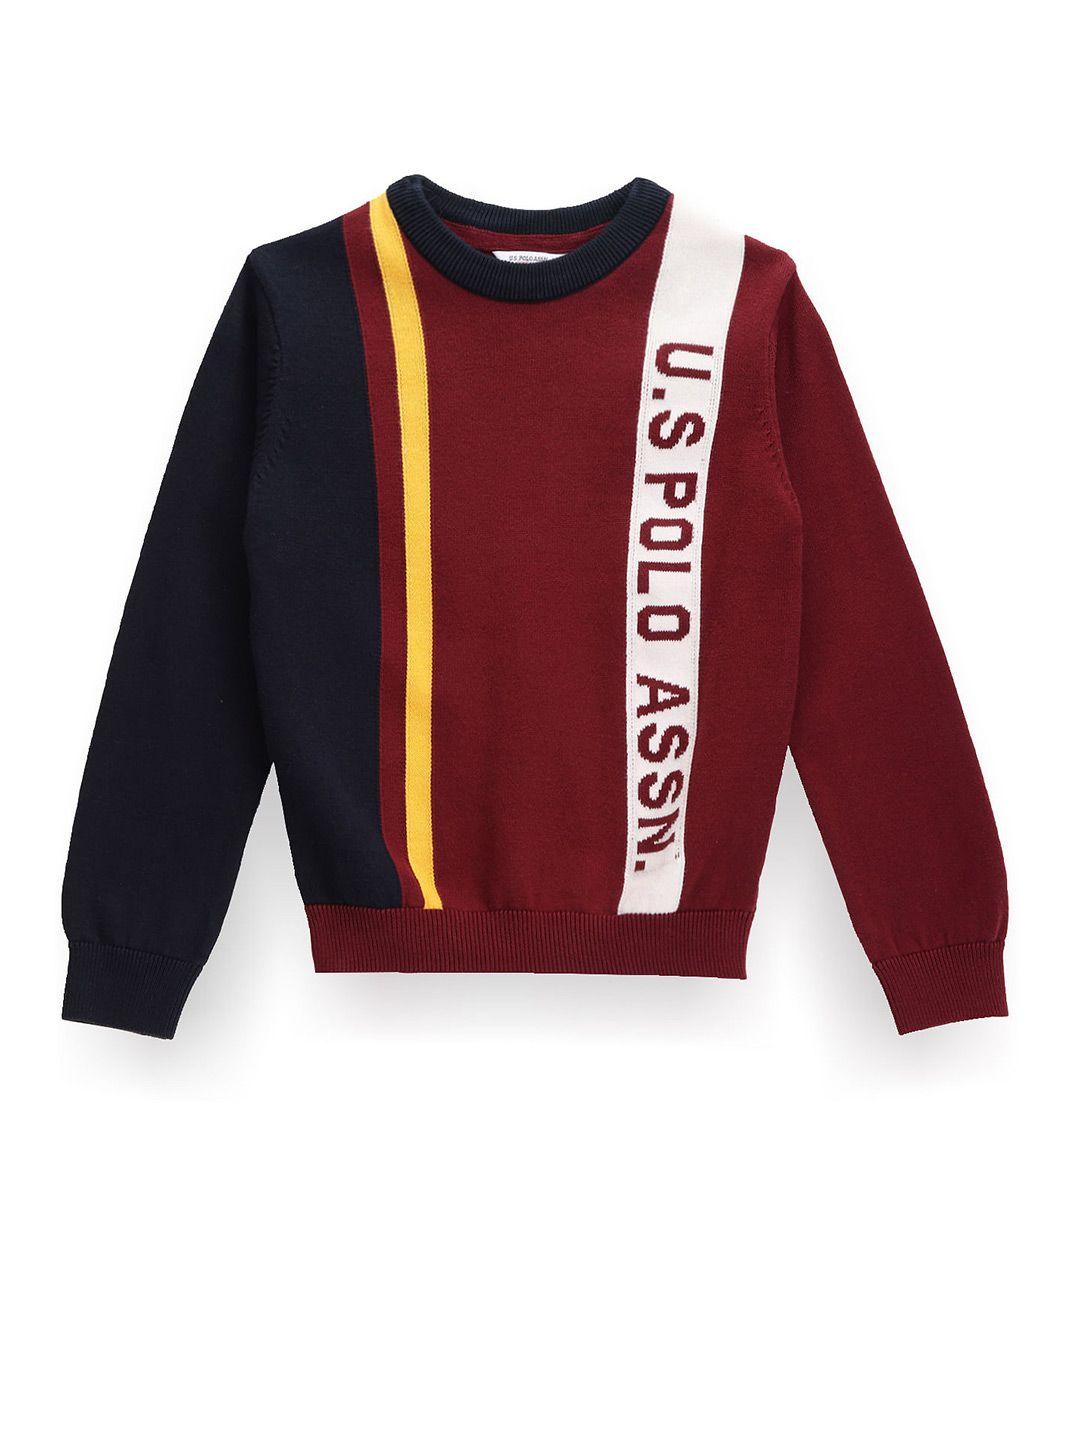 u.s.-polo-assn.-kids-boys-brand-logo-printed-pure-cotton-pullover